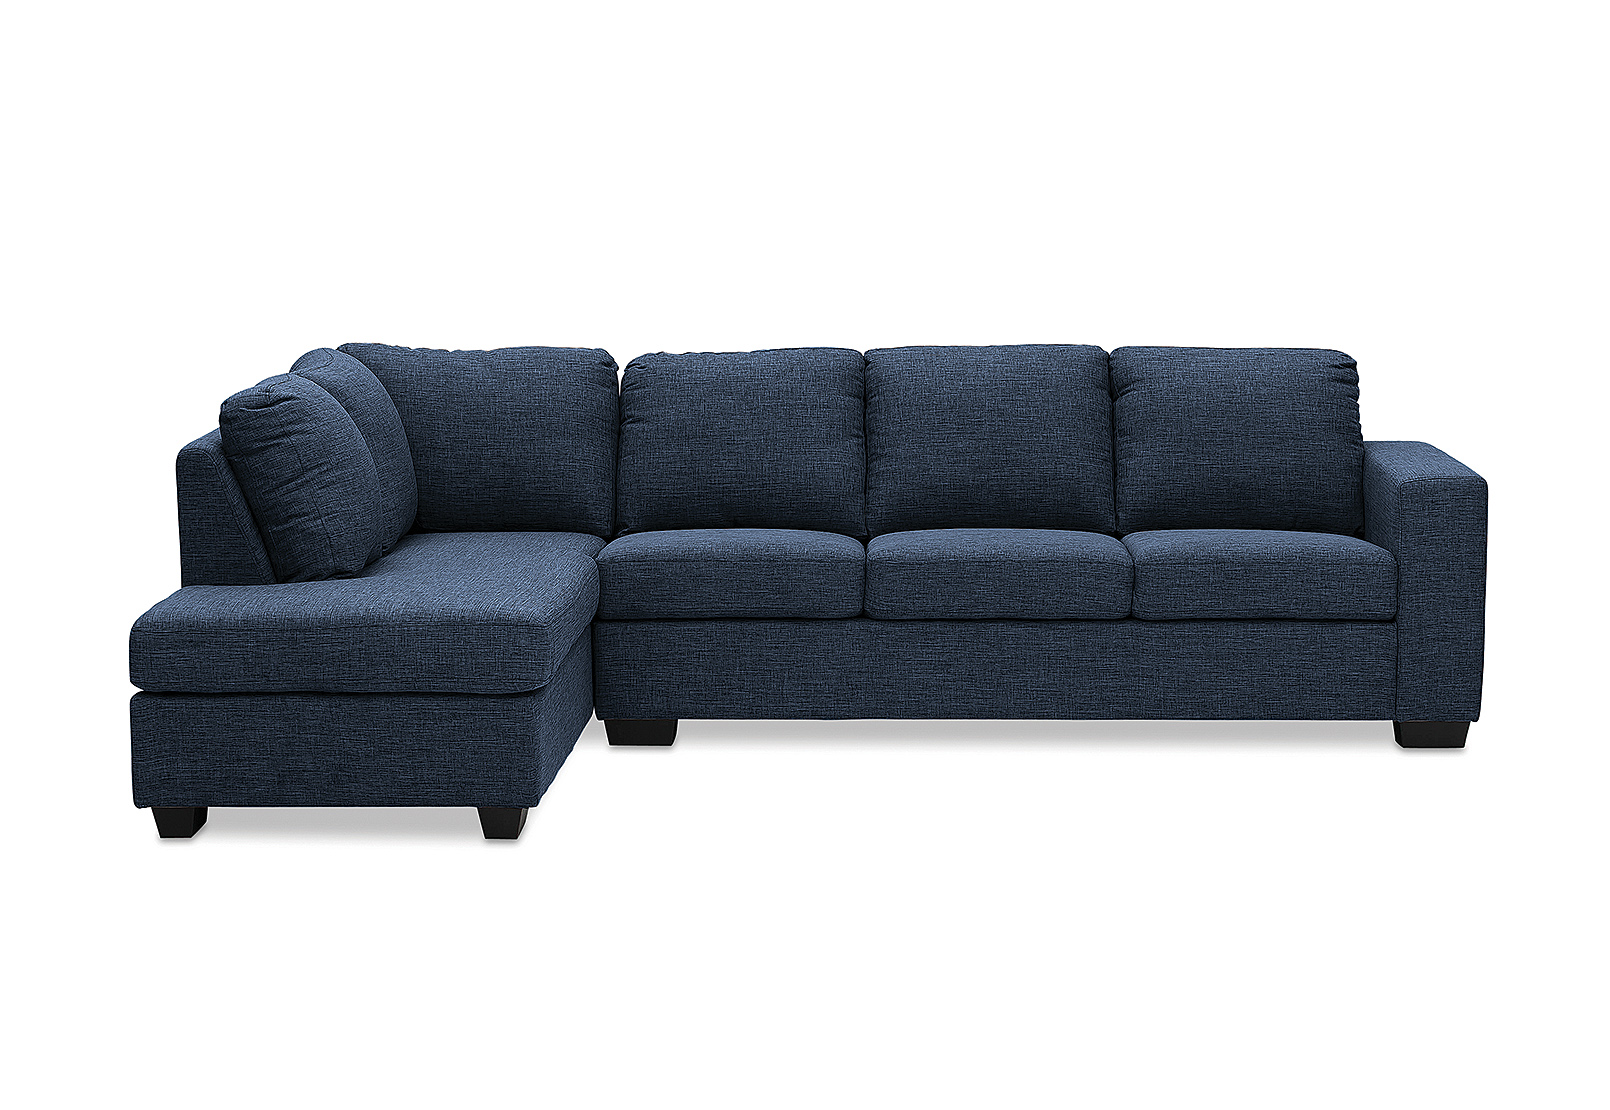 NAVY BONZA Fabric Corner Lounge with LHF Chaise | Amart Furniture